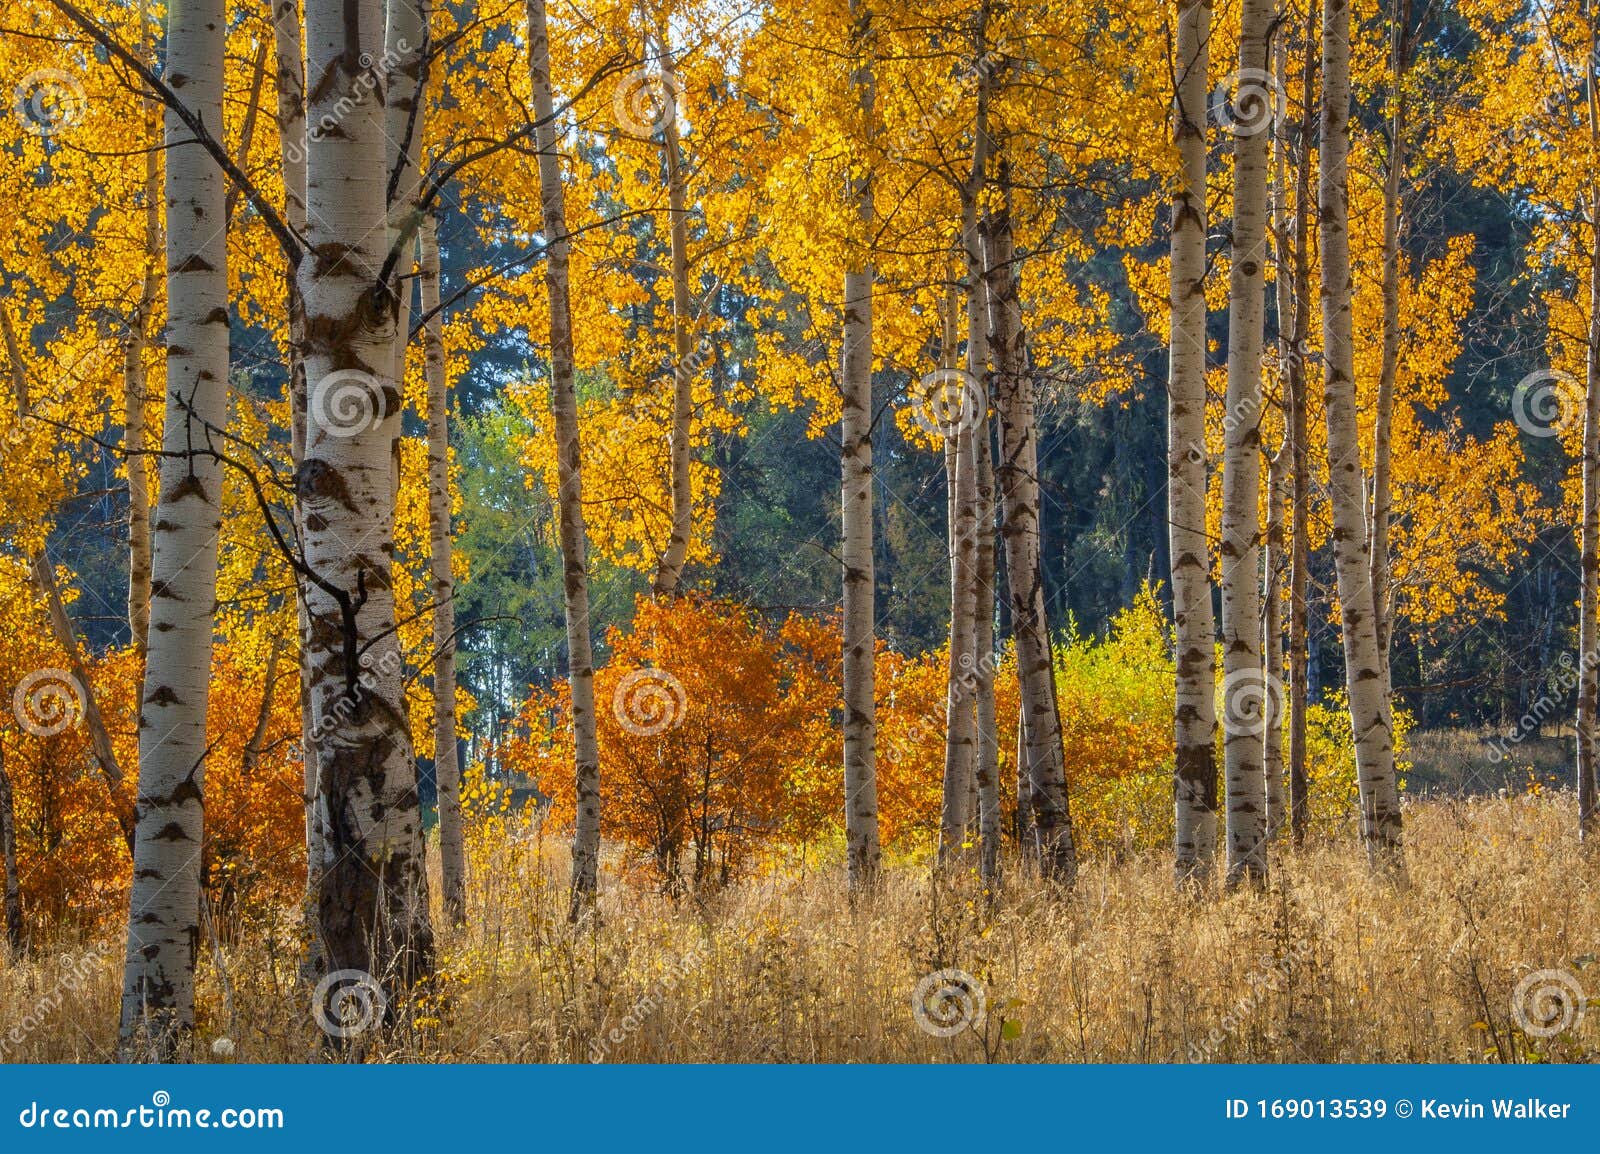 White Barked Quaking Aspen Trees Under Autumn Leaves Stock Image